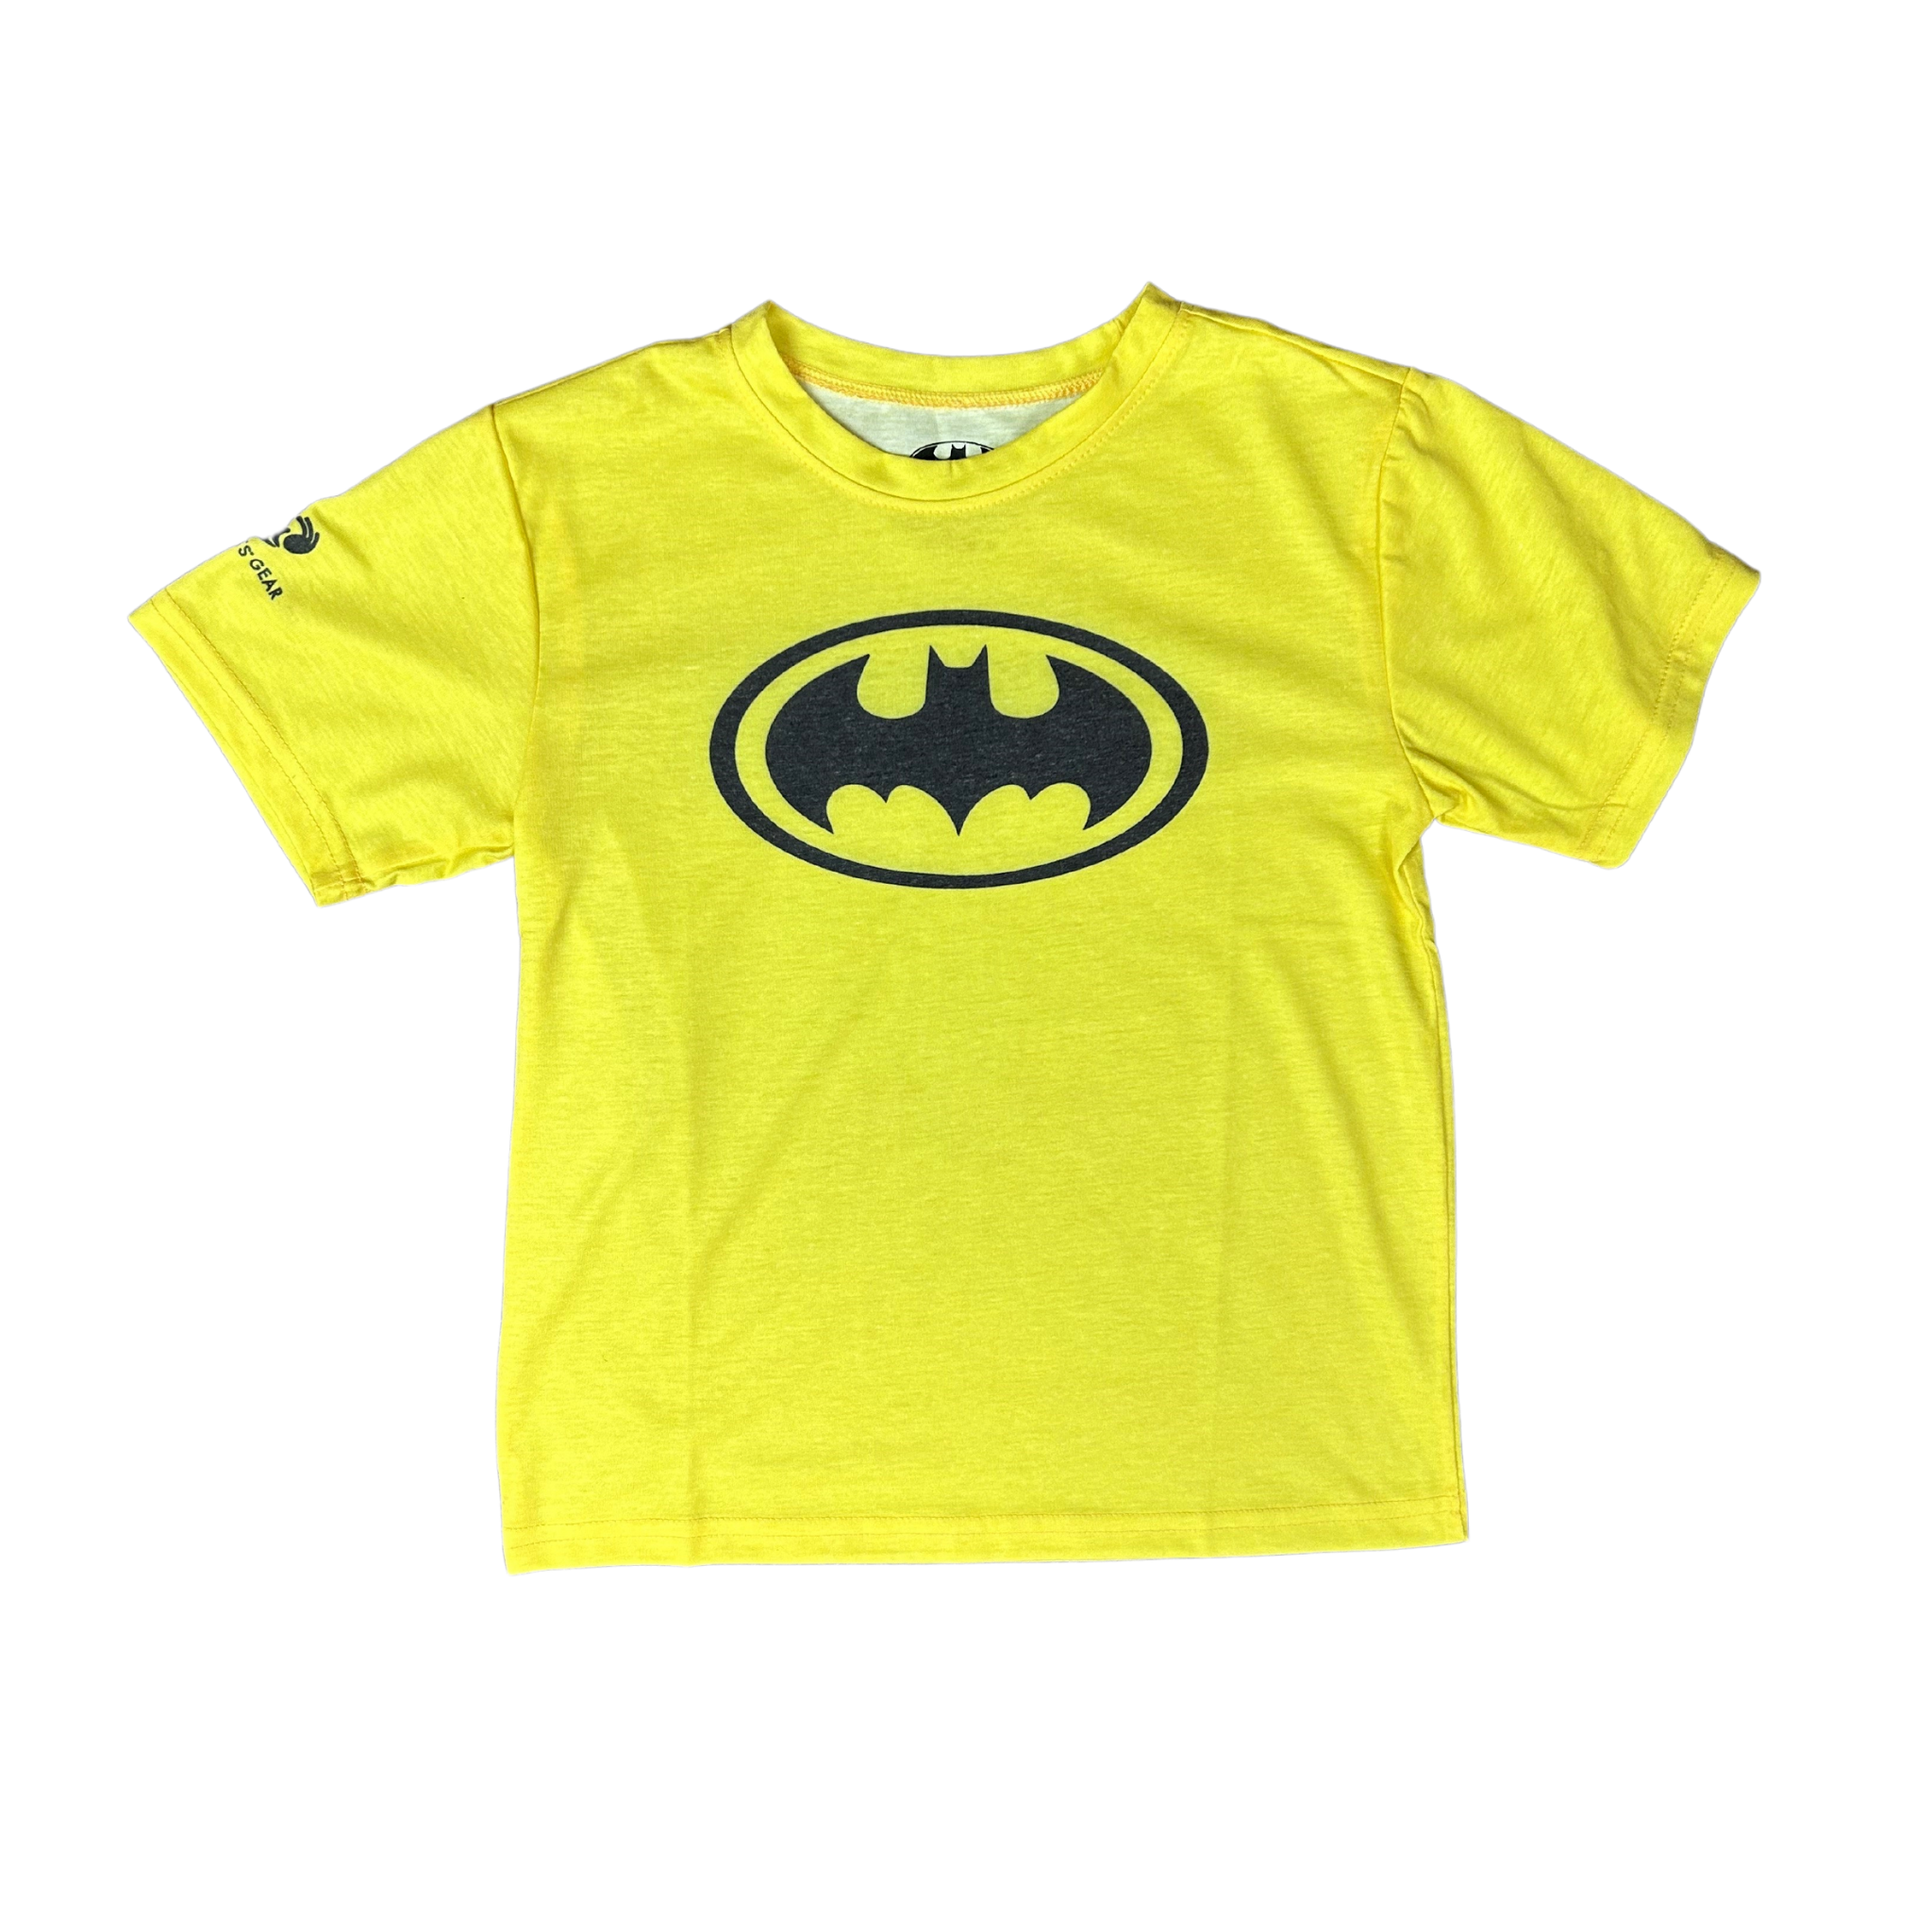 Youth Batman Logo Yellow Tee